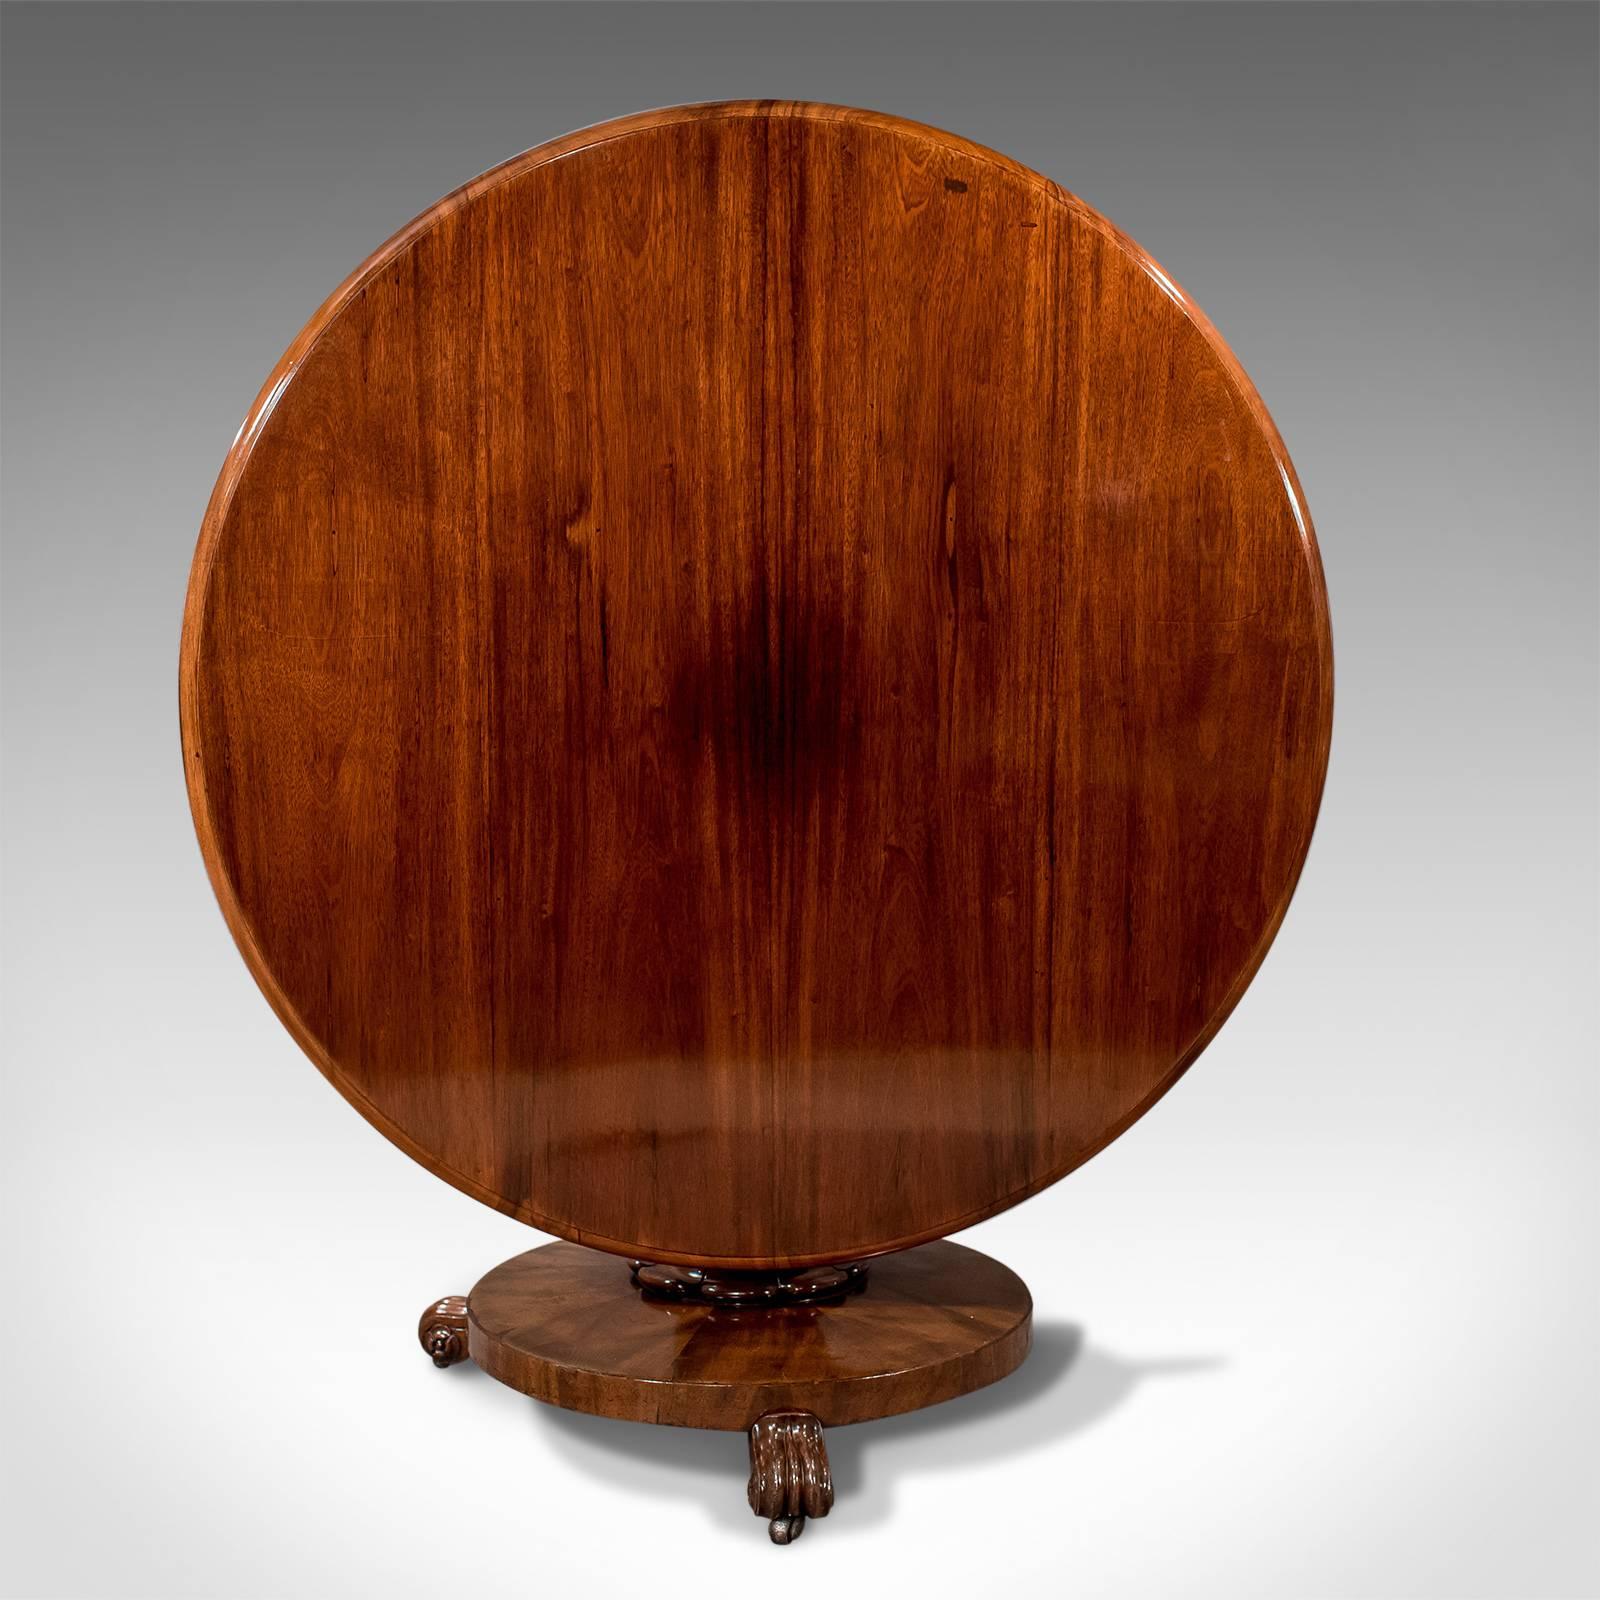 19th Century Antique Rosewood Circular Dining Table, English Regency, circa 1830